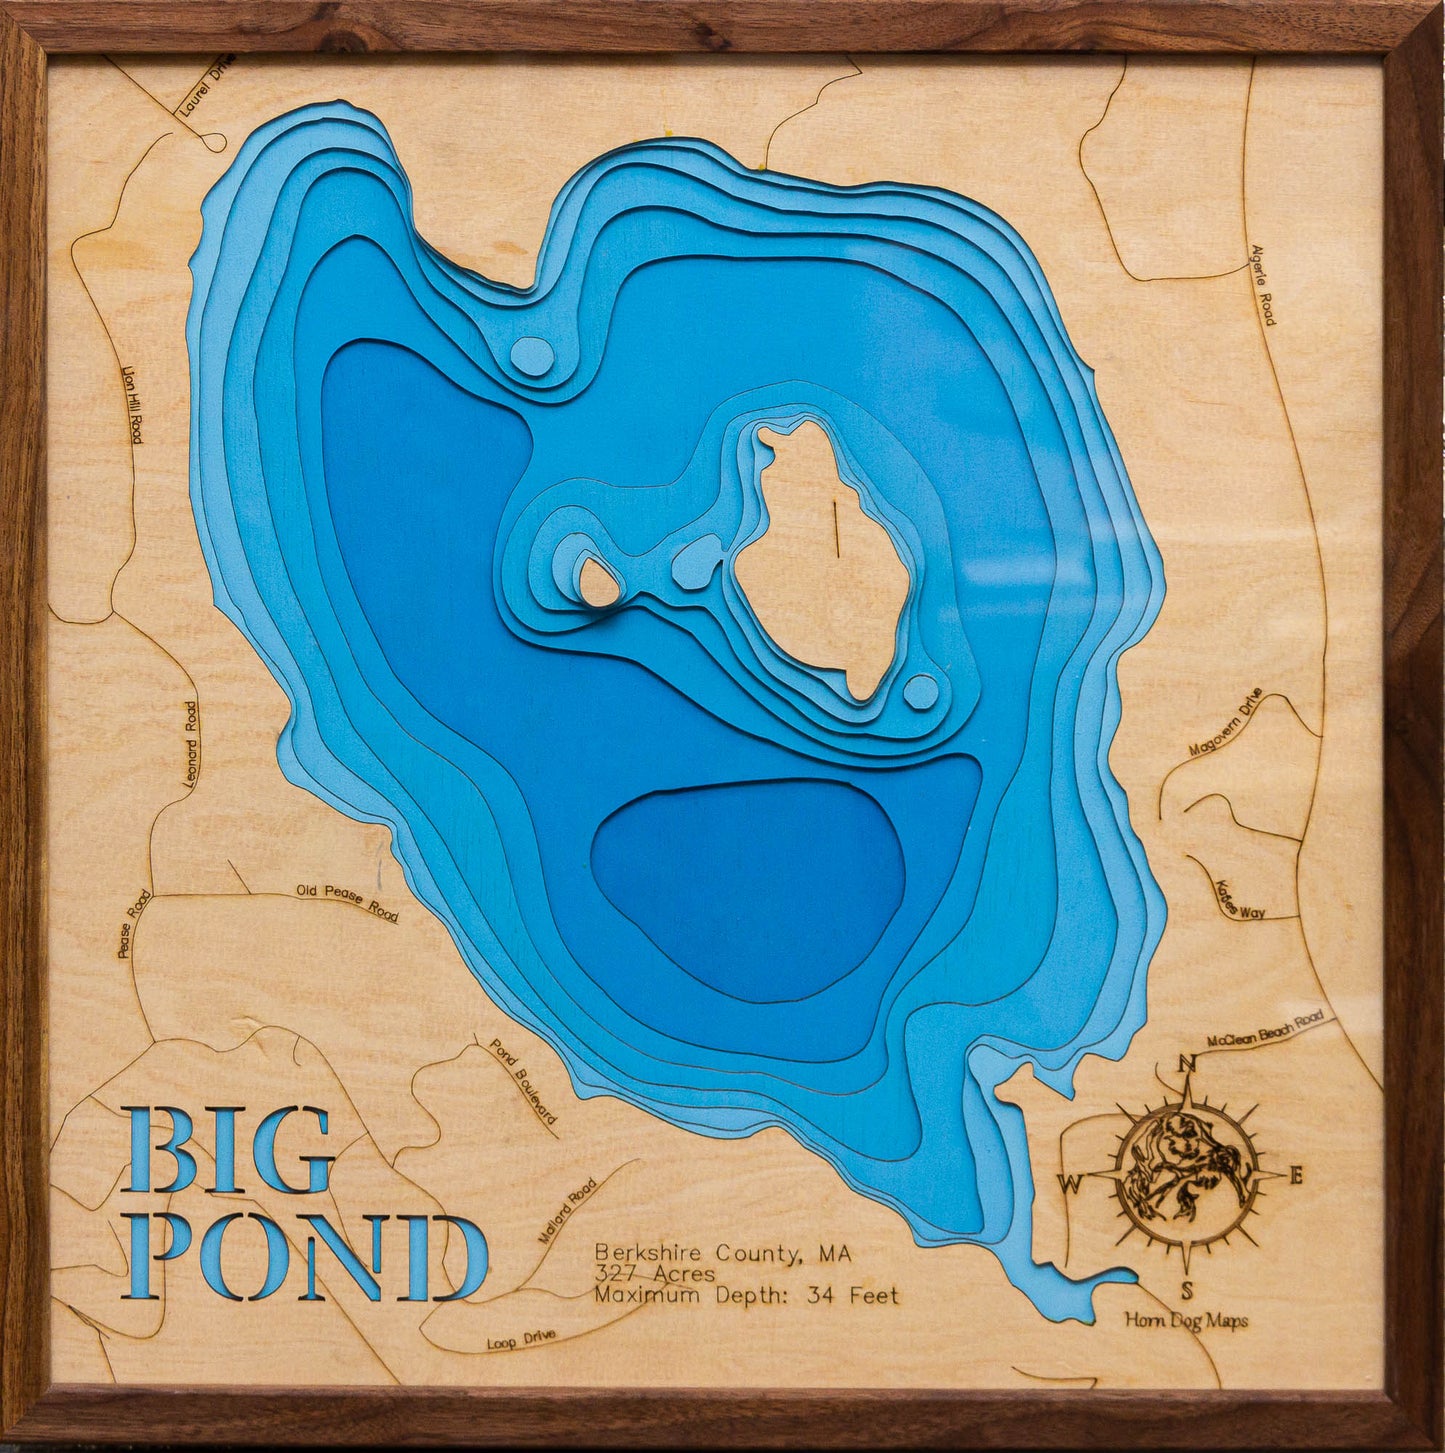 Big Pond in Berkshire County, MA